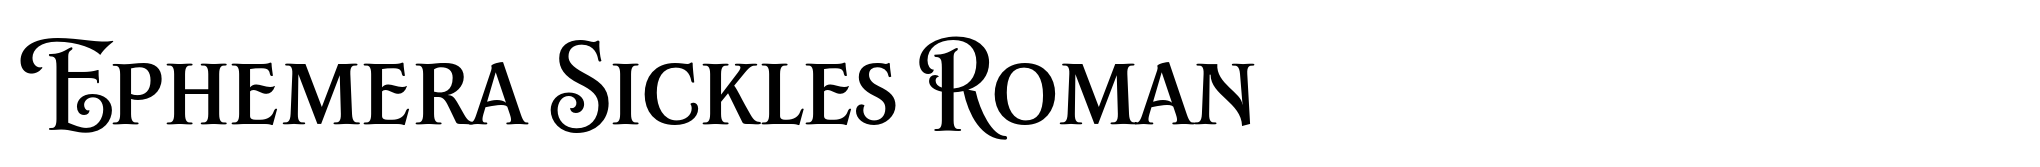 Ephemera Sickles Roman image